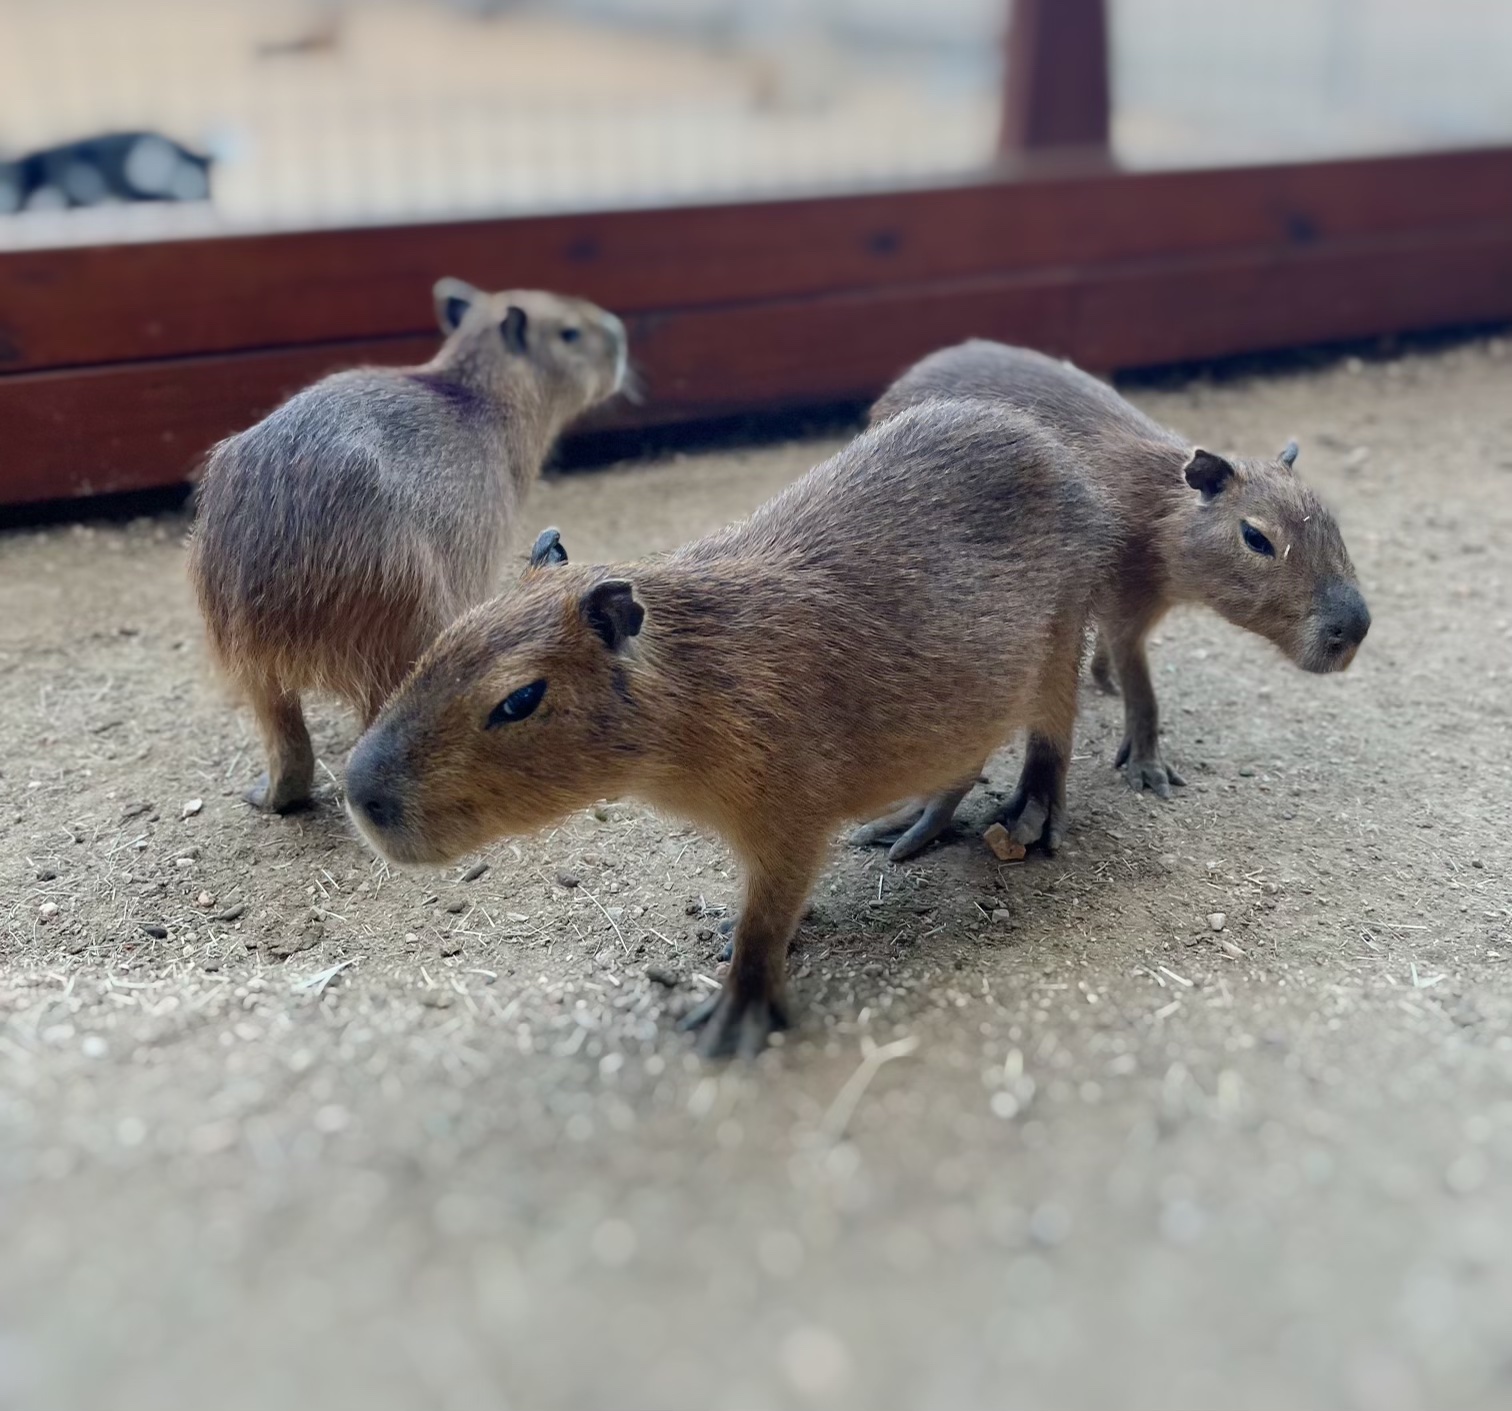 Hang Out With Capybara Babies at the Snake Farm!